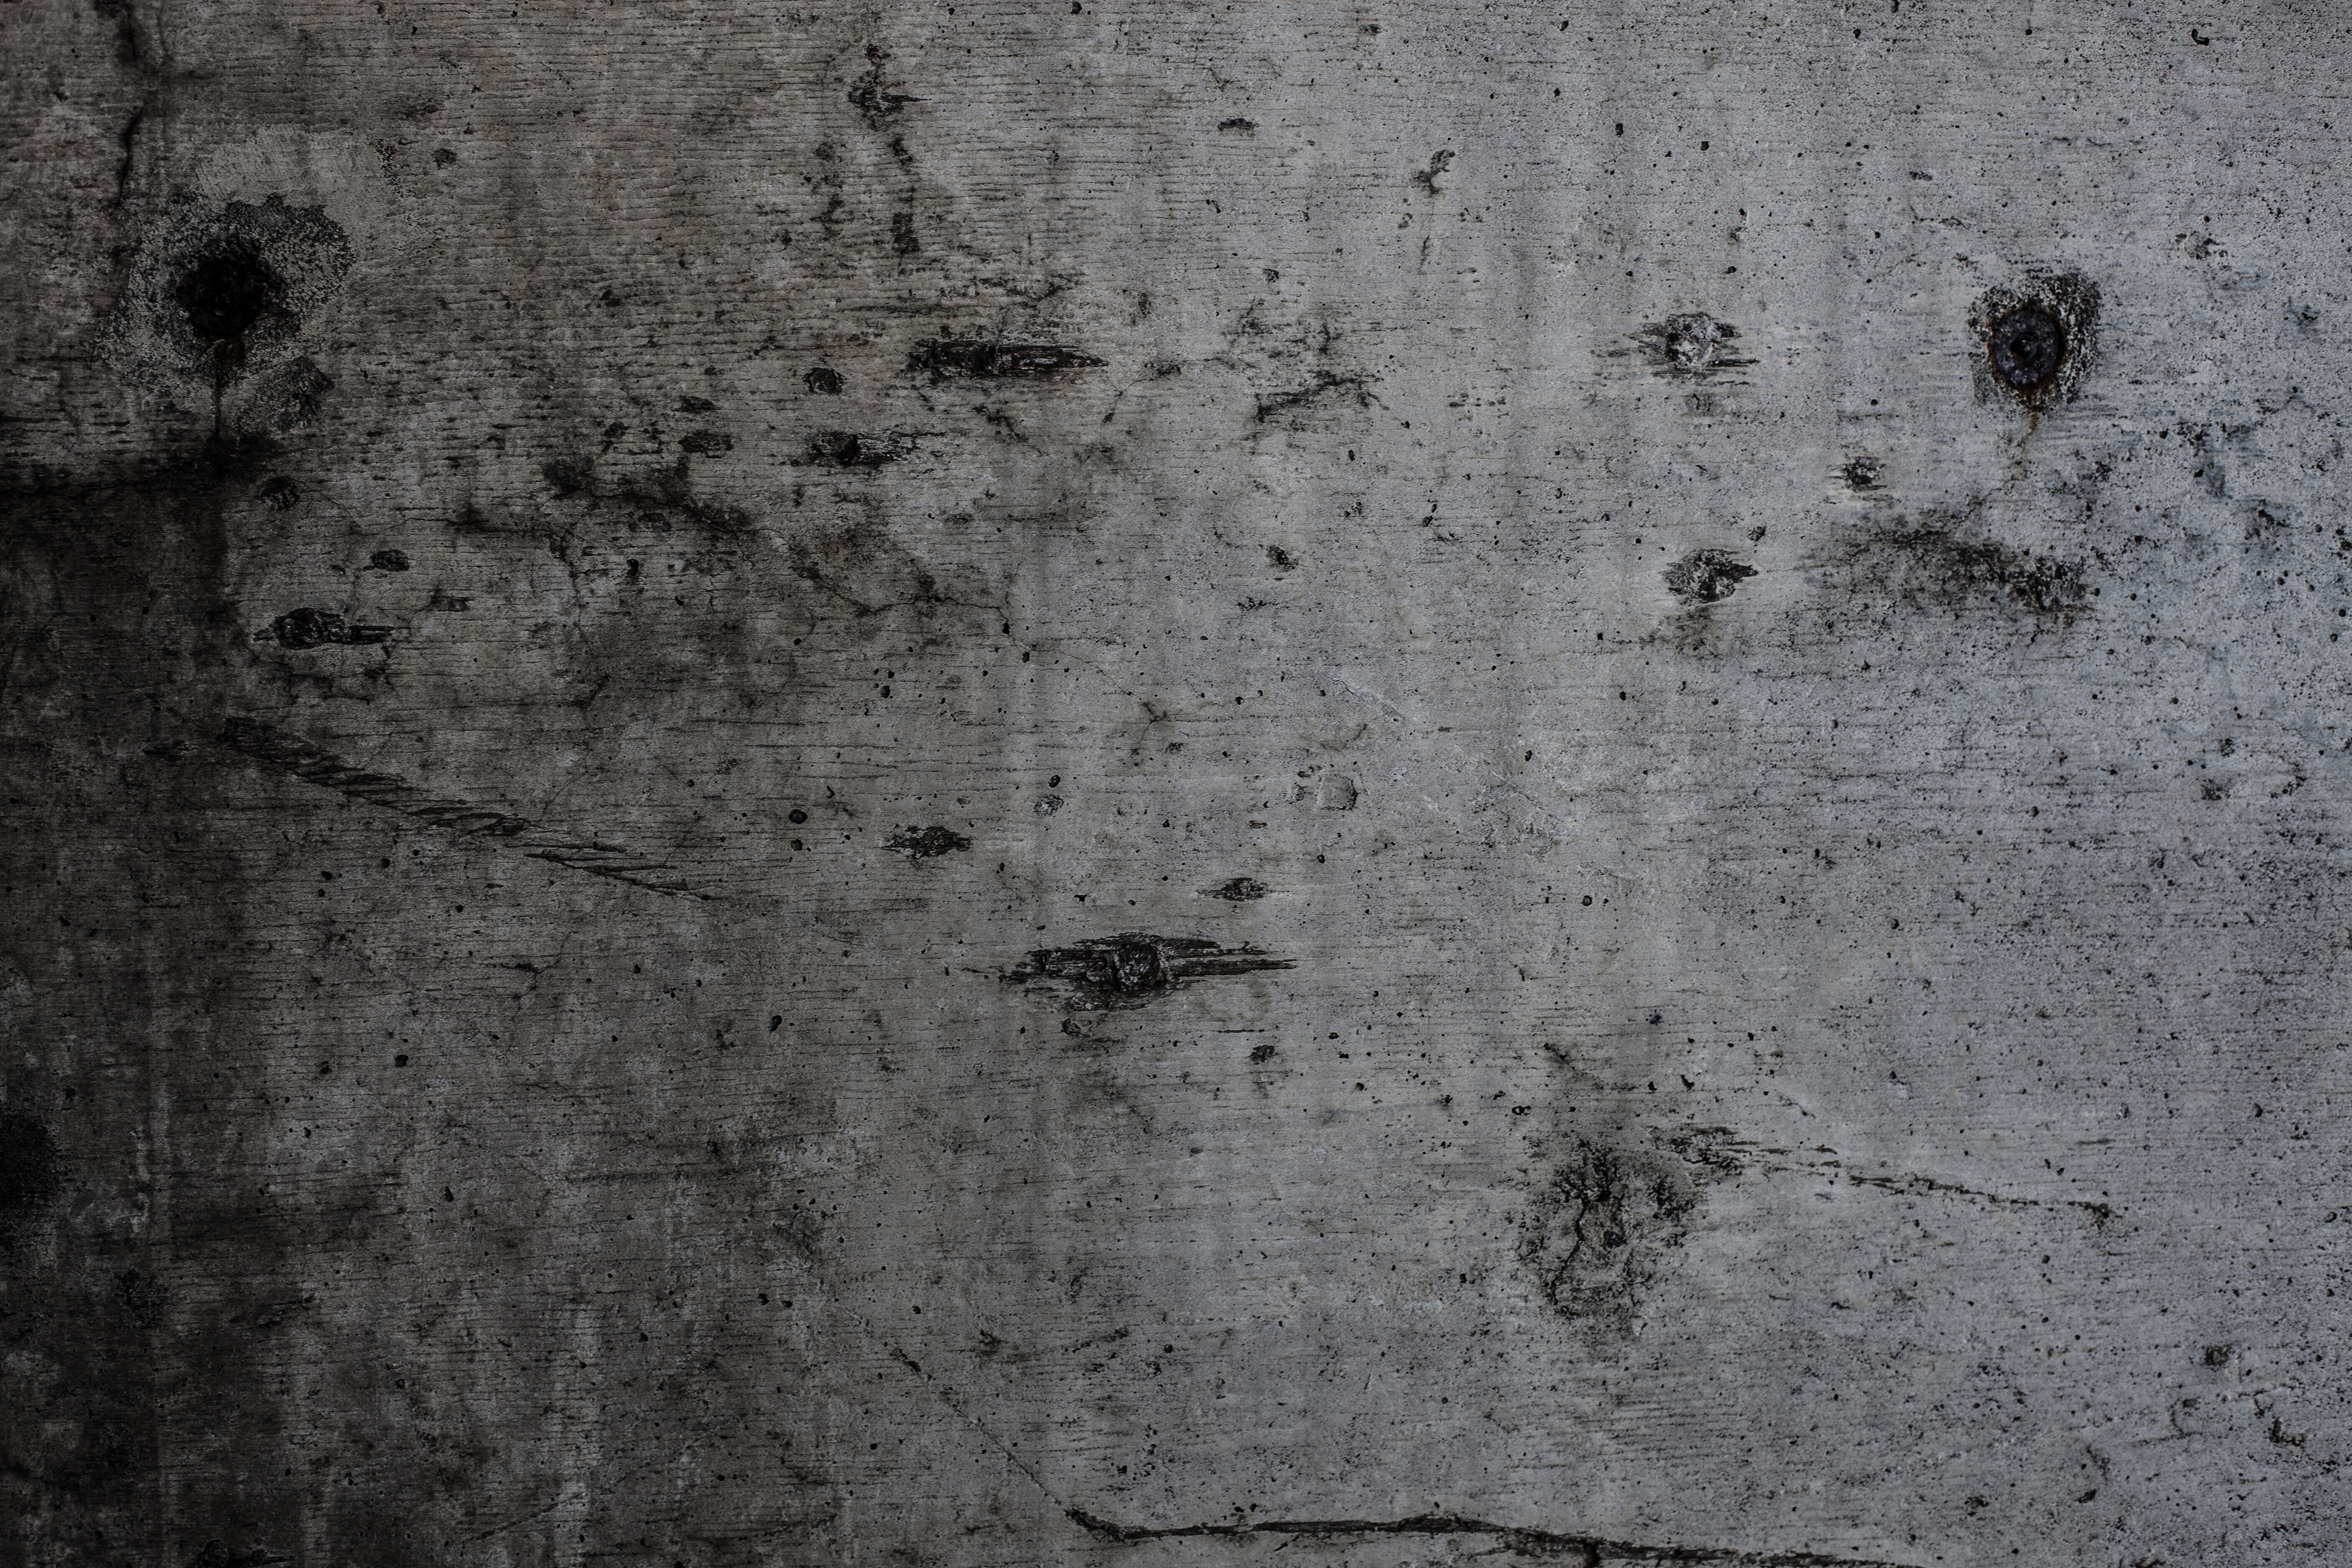 Cracked grunge concrete texture photo